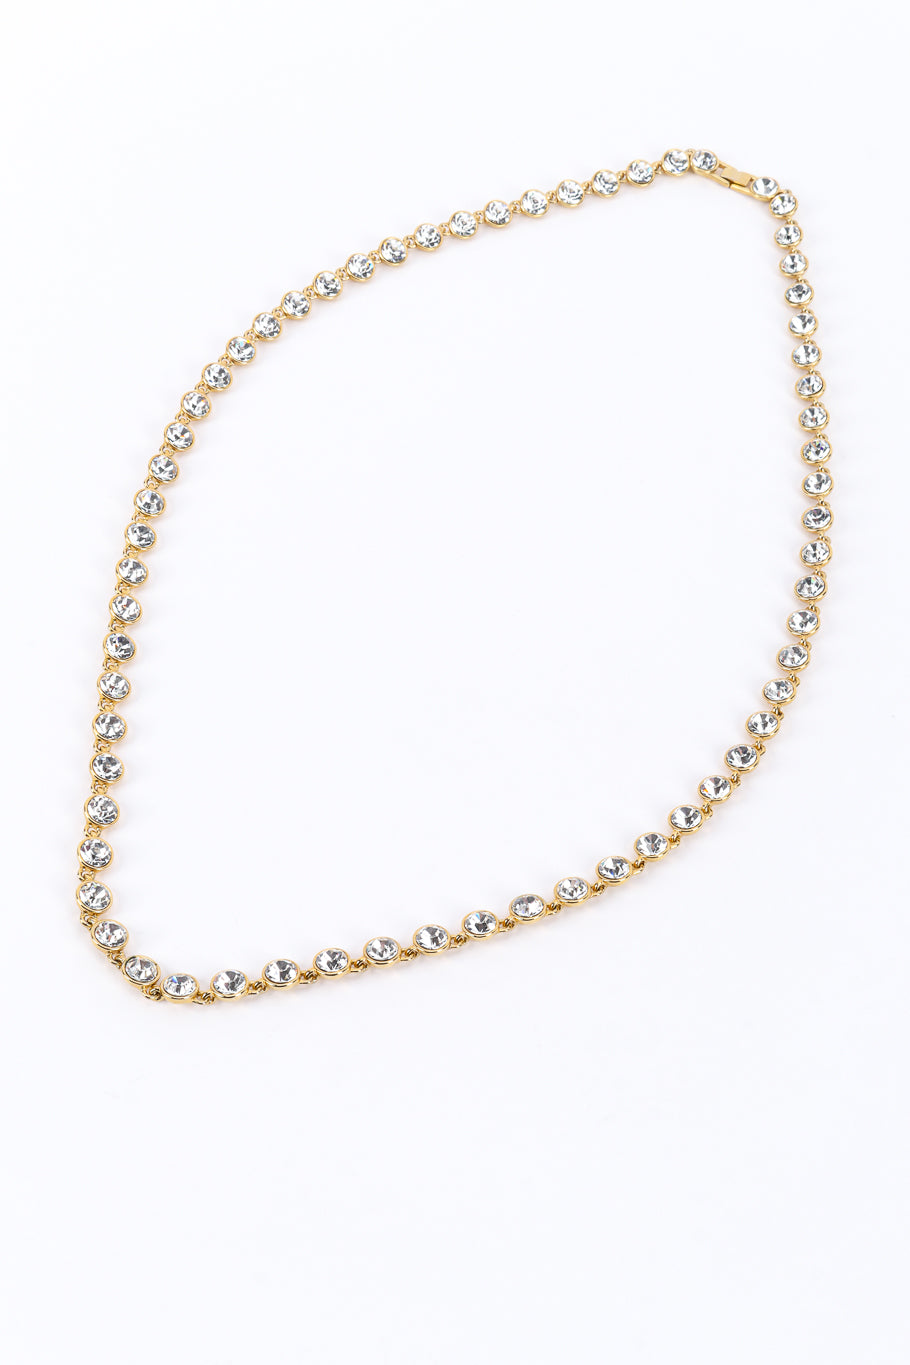 Vintage Givenchy Crystal Link Necklace front @recessla